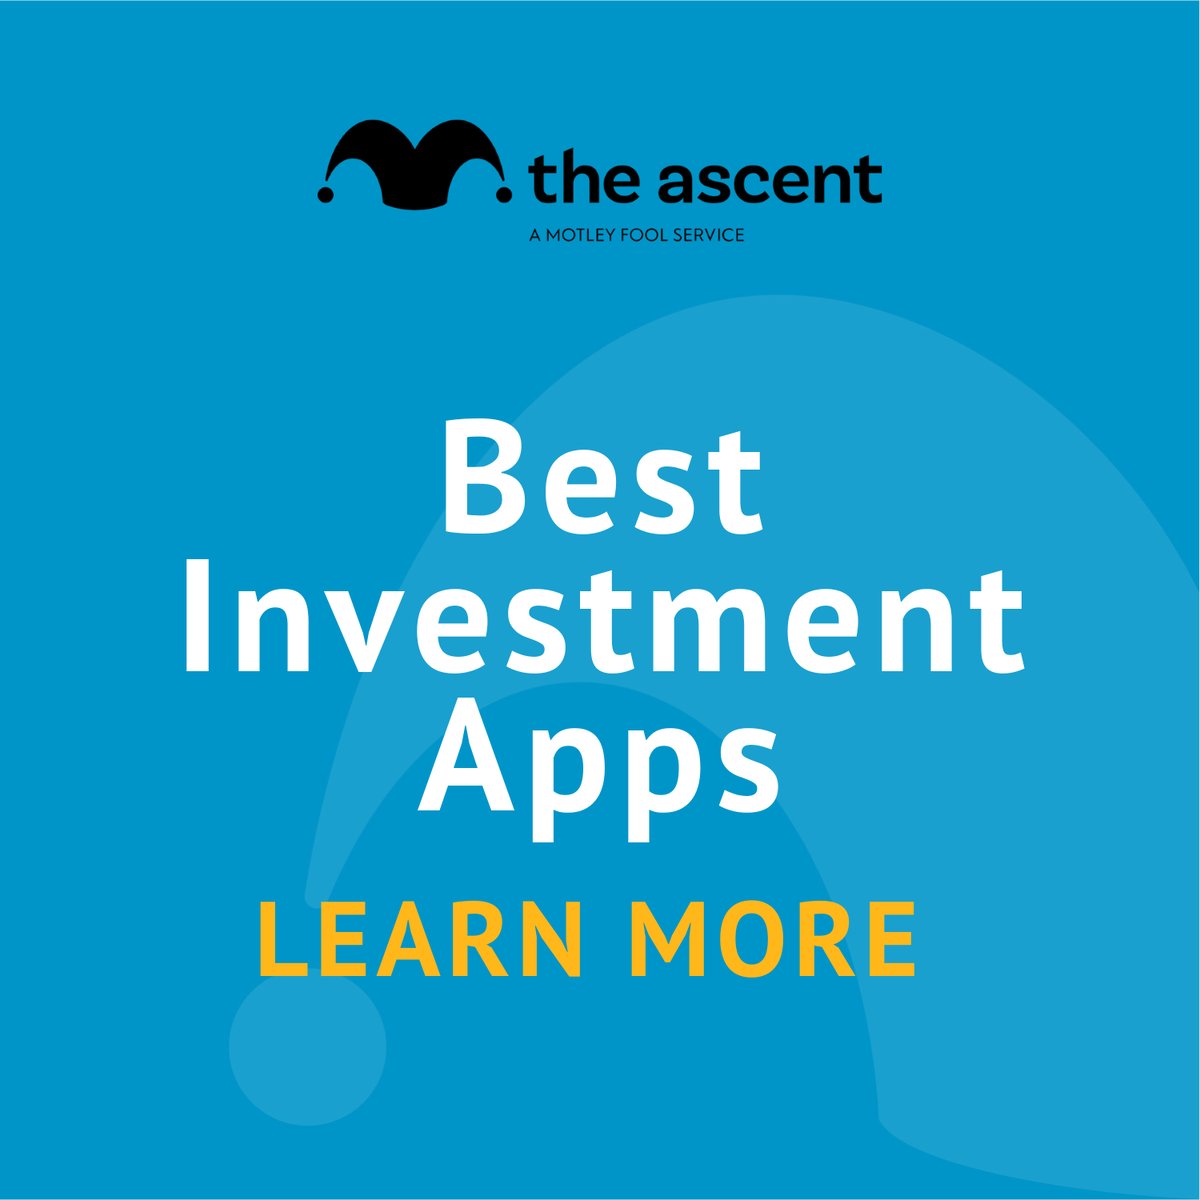 Bamboo: Invest. Trade. Earn. APK (Android App) - Baixar Grátis